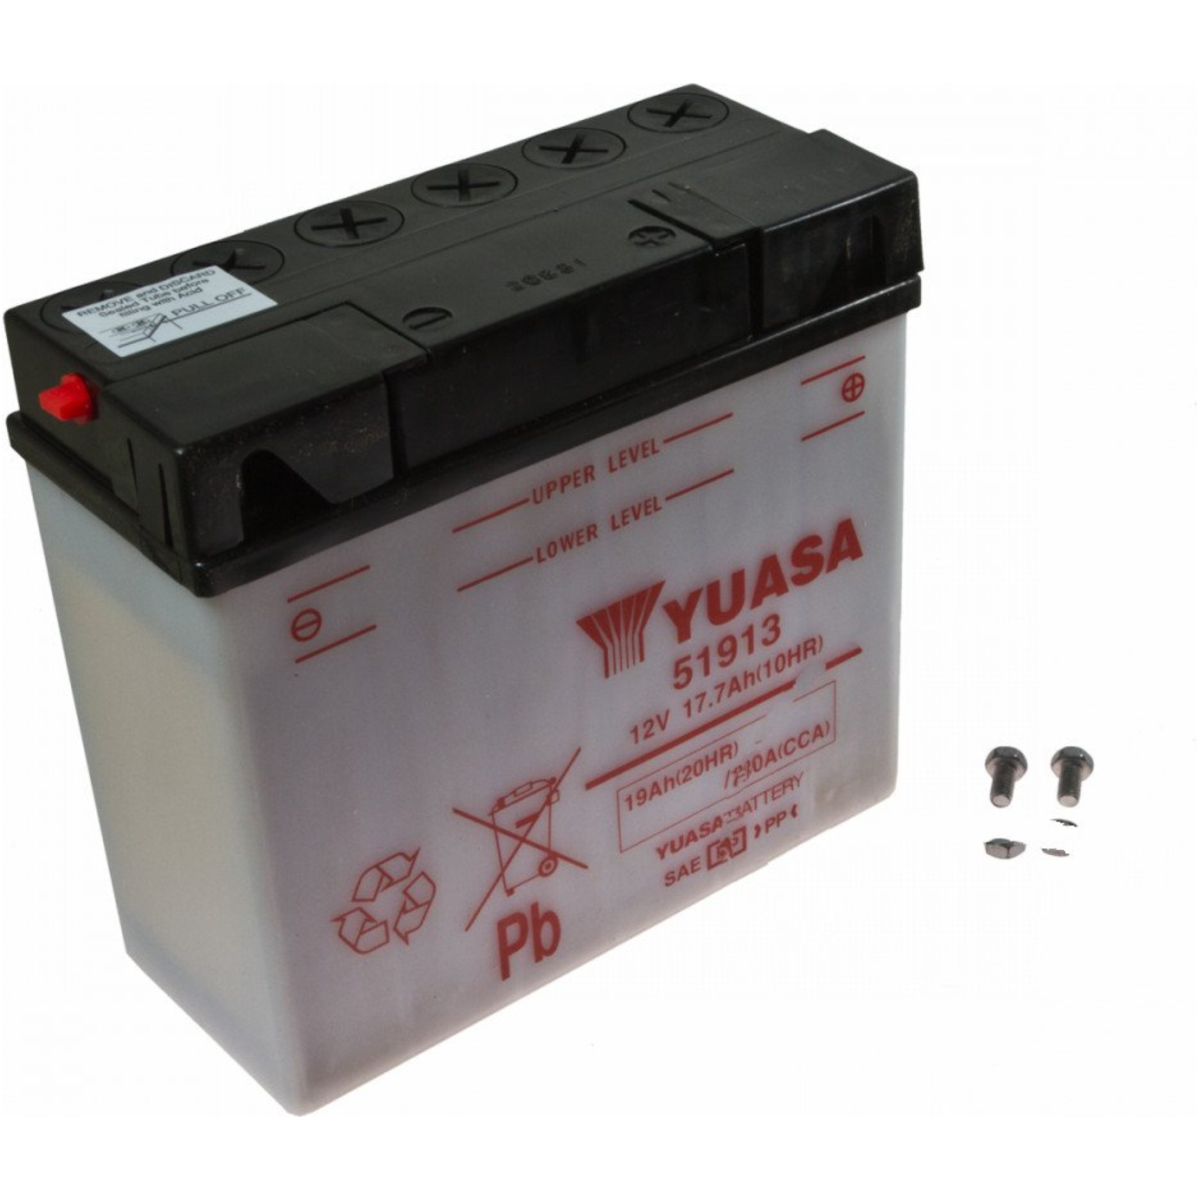 Yuasa 51913(dc) motorradbatterie 51913 dry von Yuasa